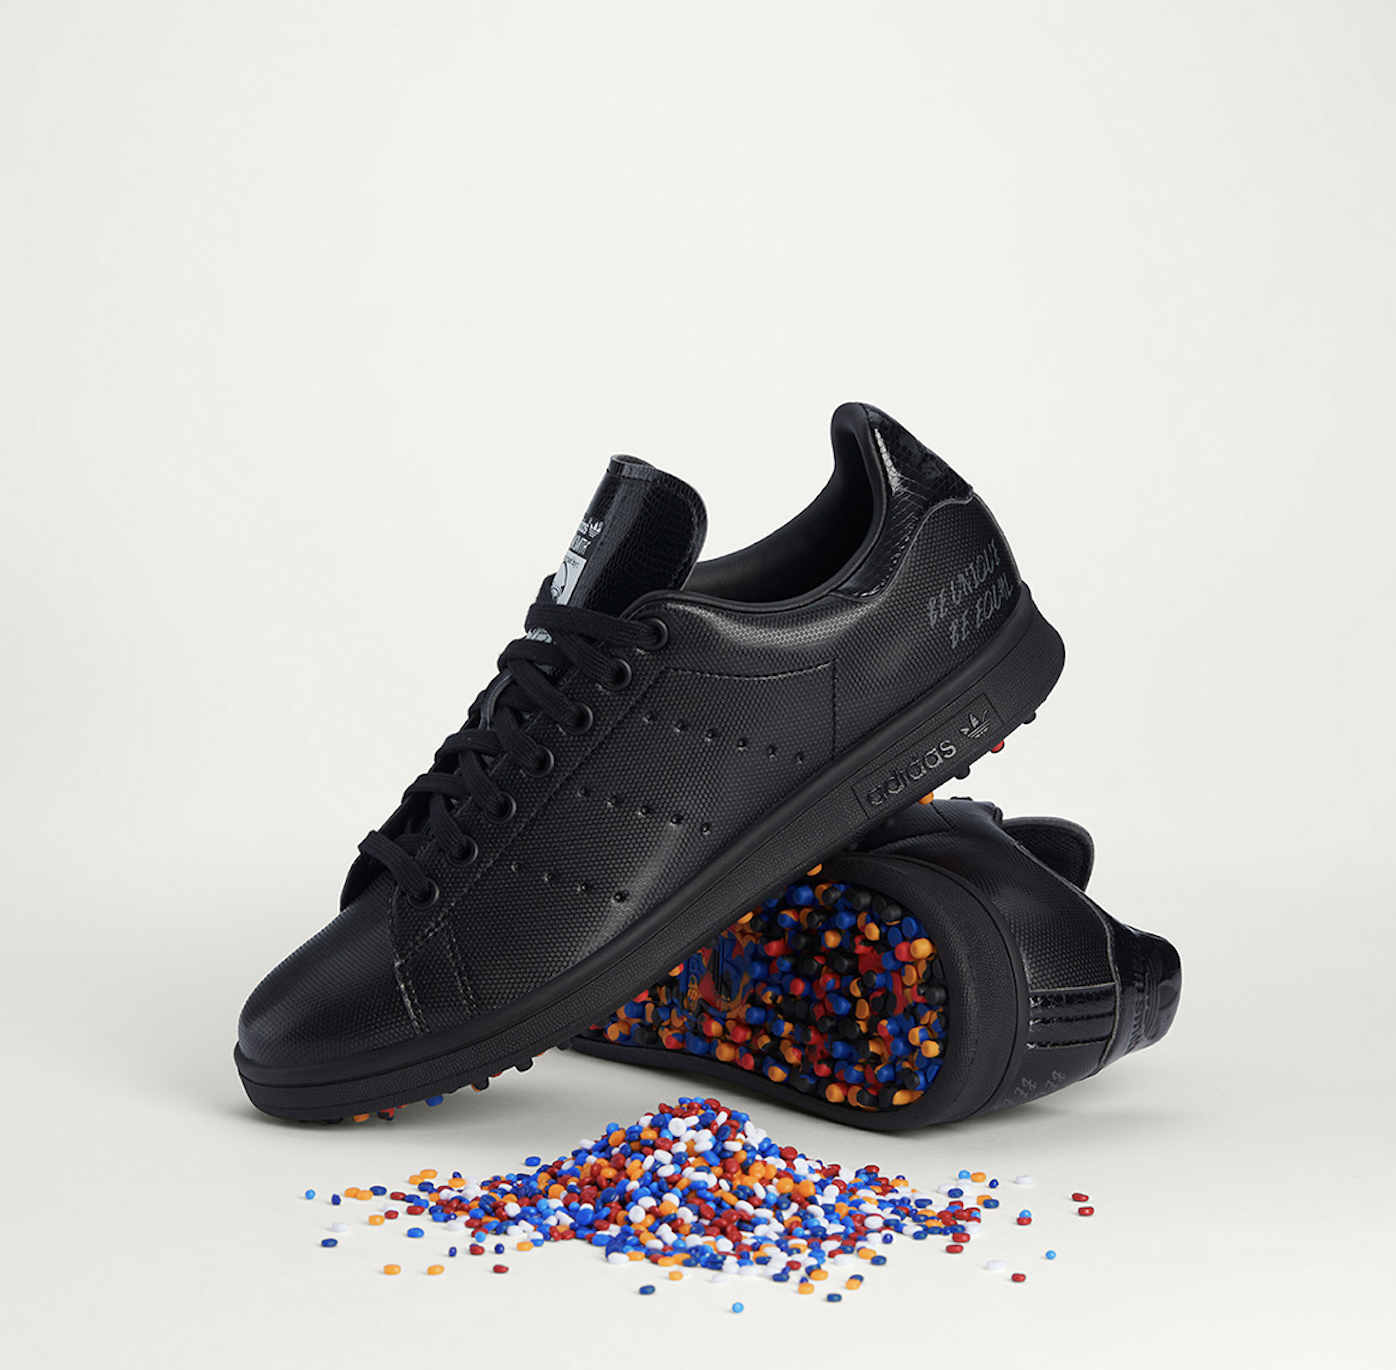 Adidas launches limited-edition Stan Smith golf shoe to celebrate Zozo  Championship – GolfWRX